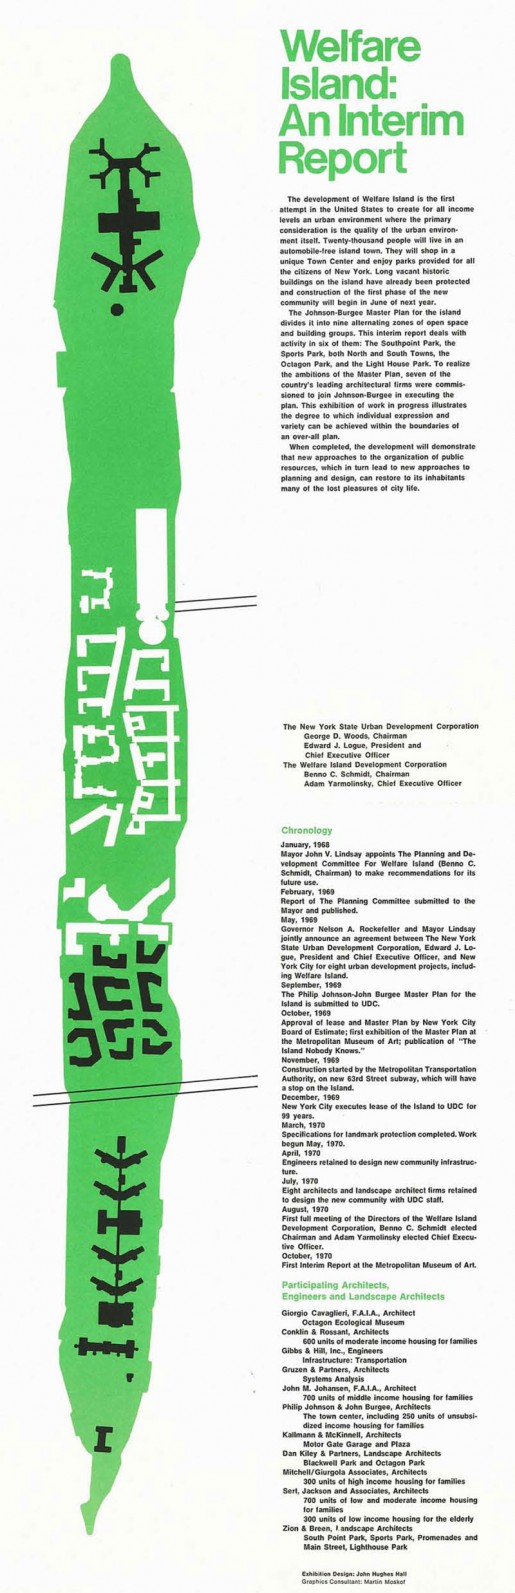 Welfare Island: An Interim Report, exhibition brochure, New York State Urban Development Corporation & Welfare Island Development Corporation, 1970.
